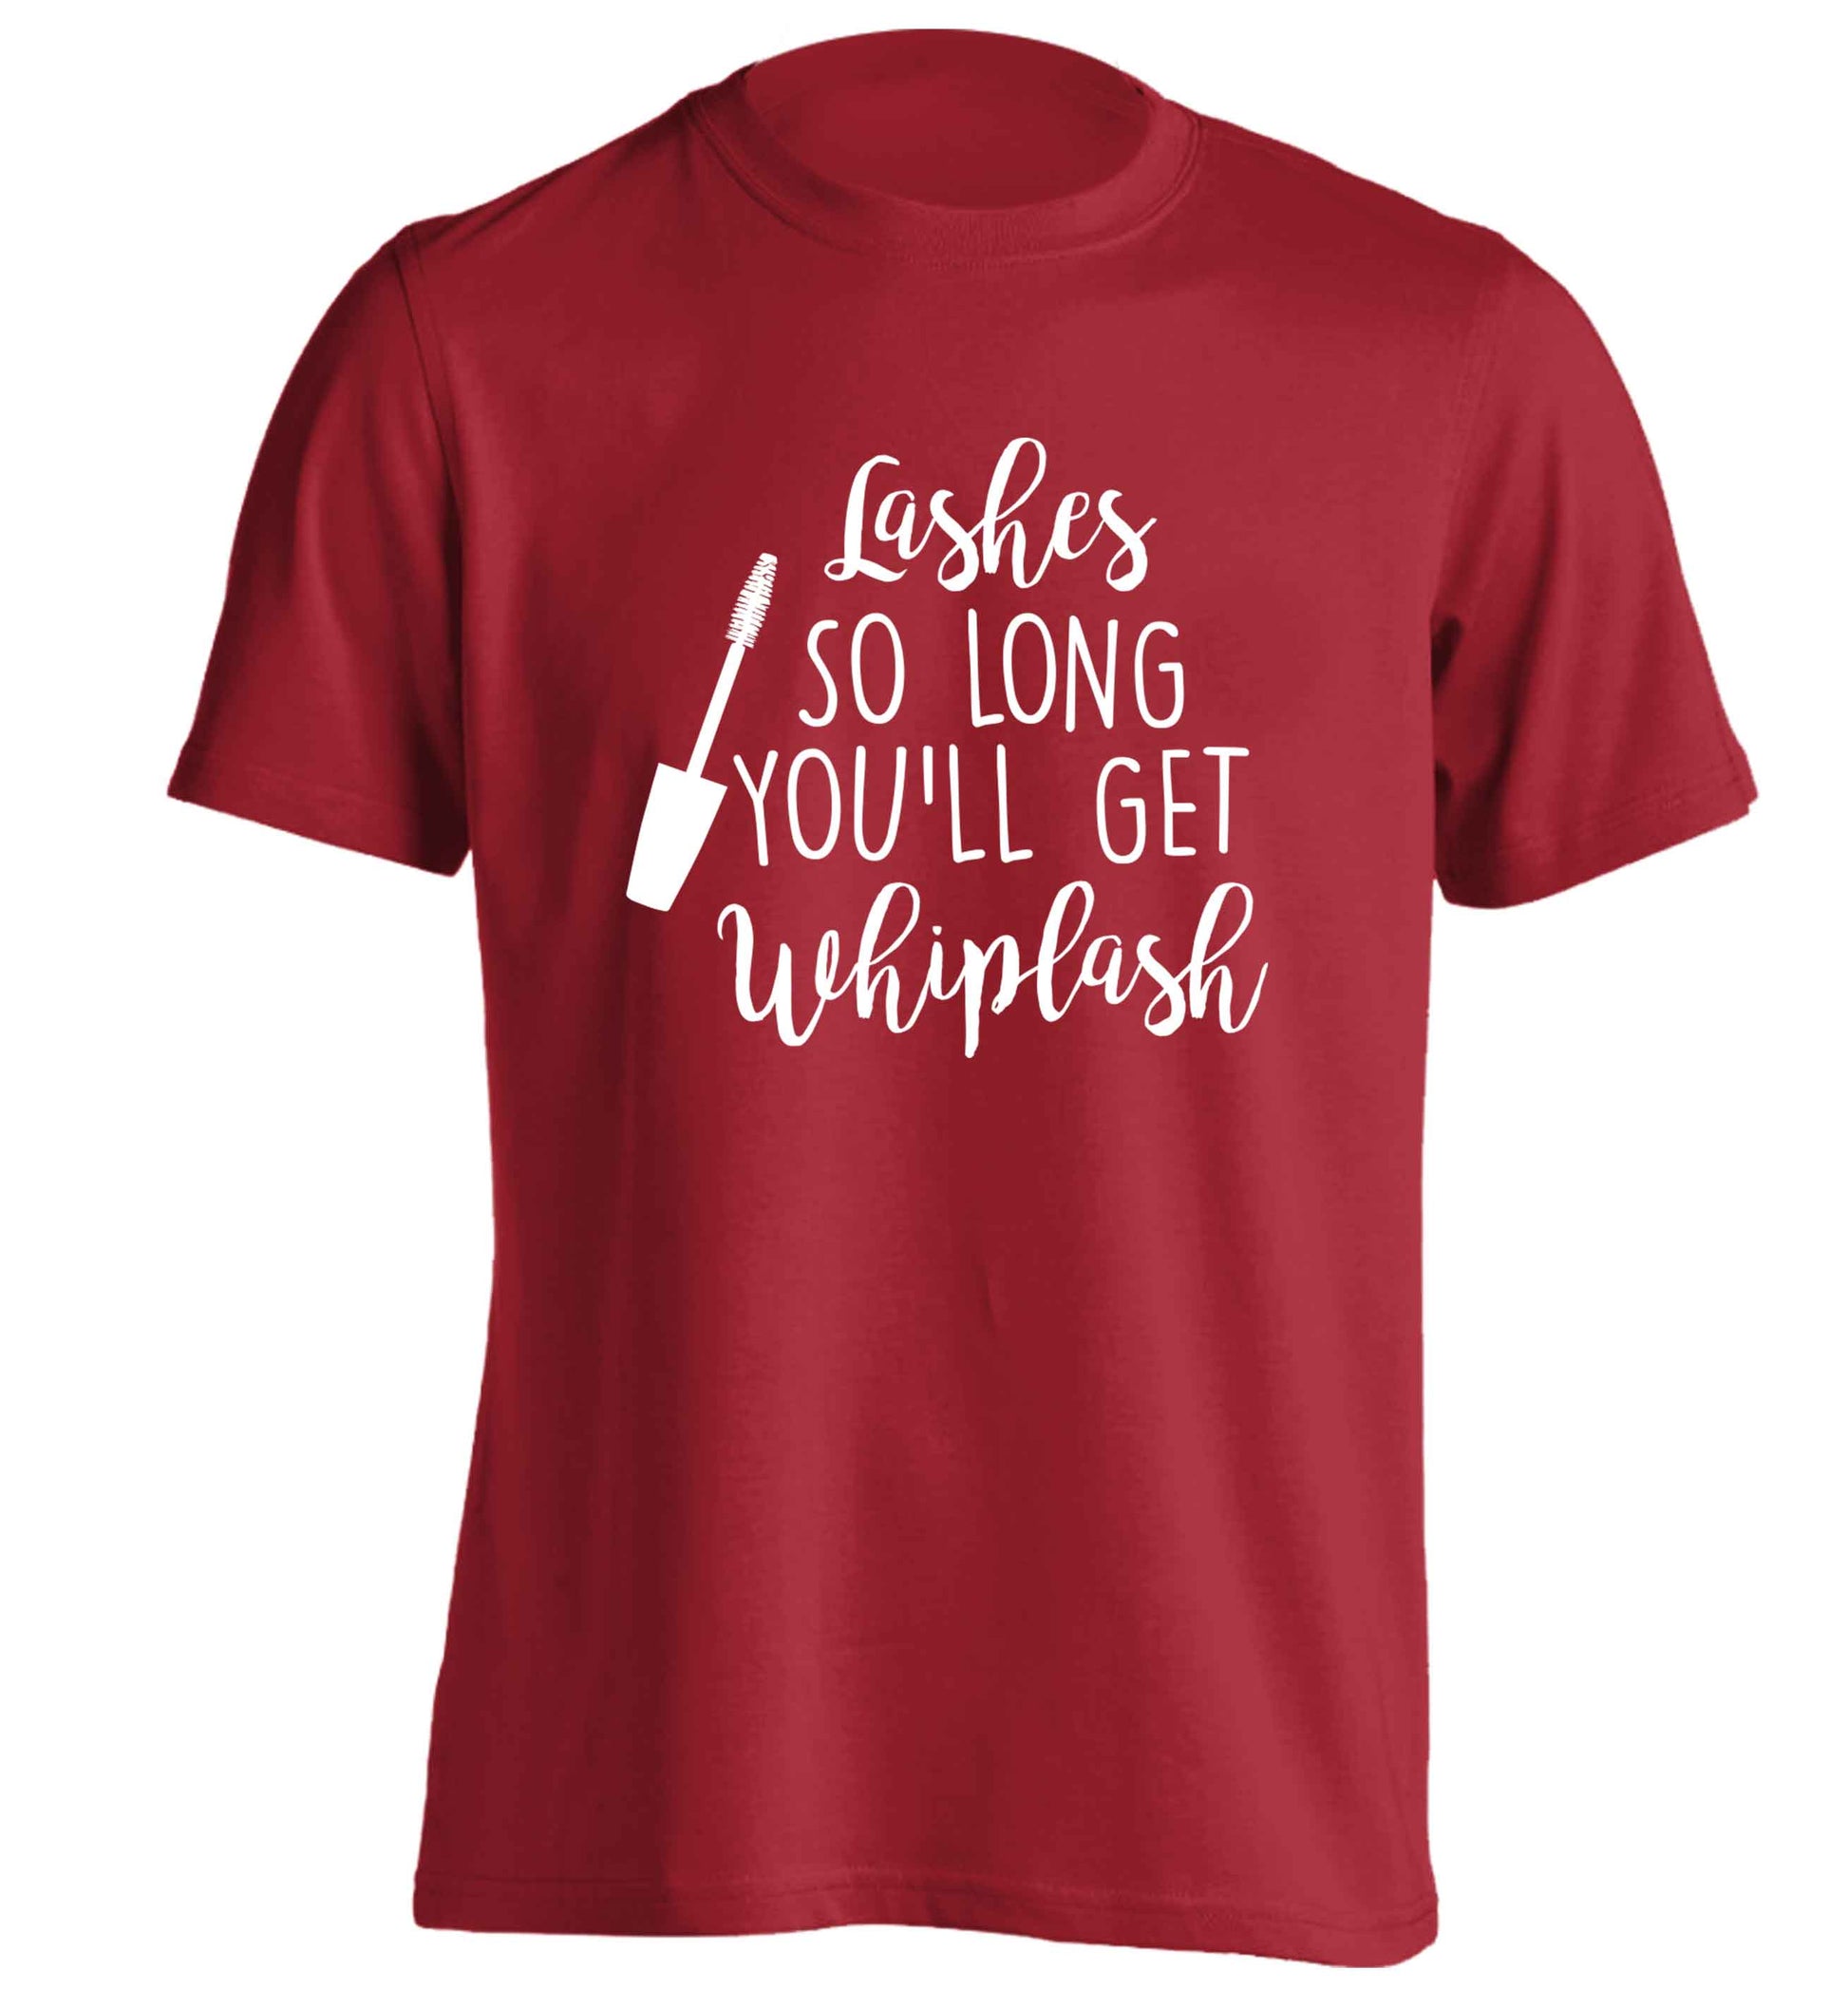 Lashes so long you'll get whiplash adults unisex red Tshirt 2XL